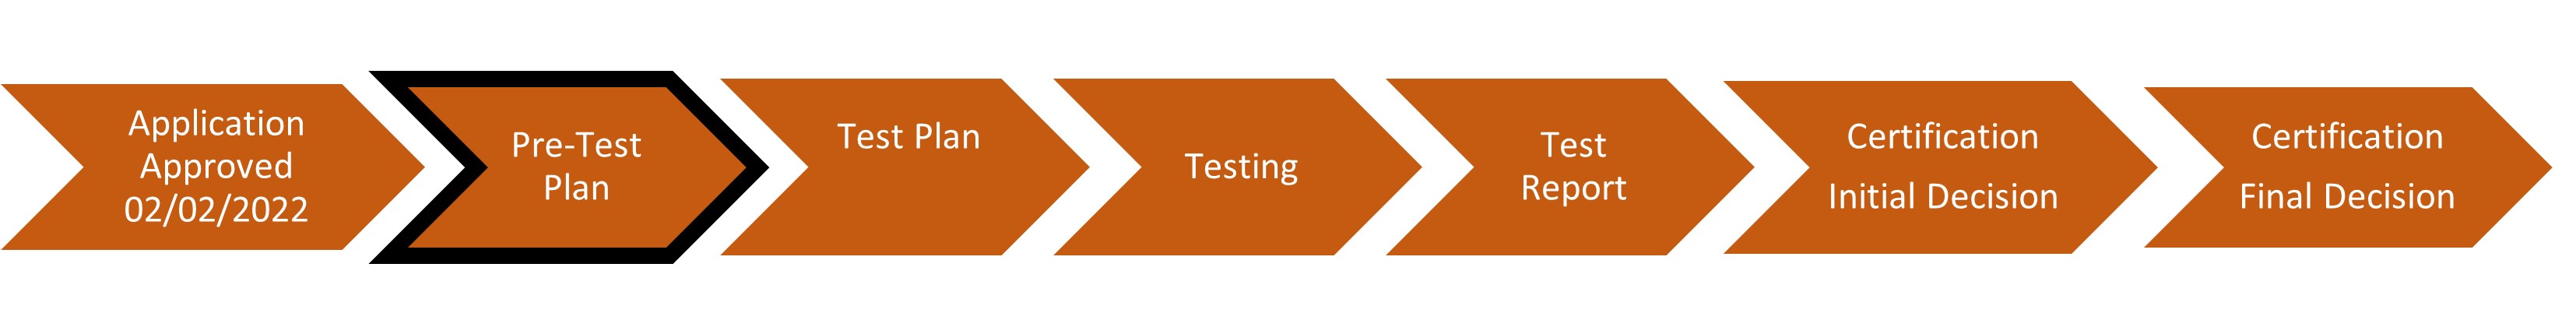 Pre-Test Plan Voting System Test Update